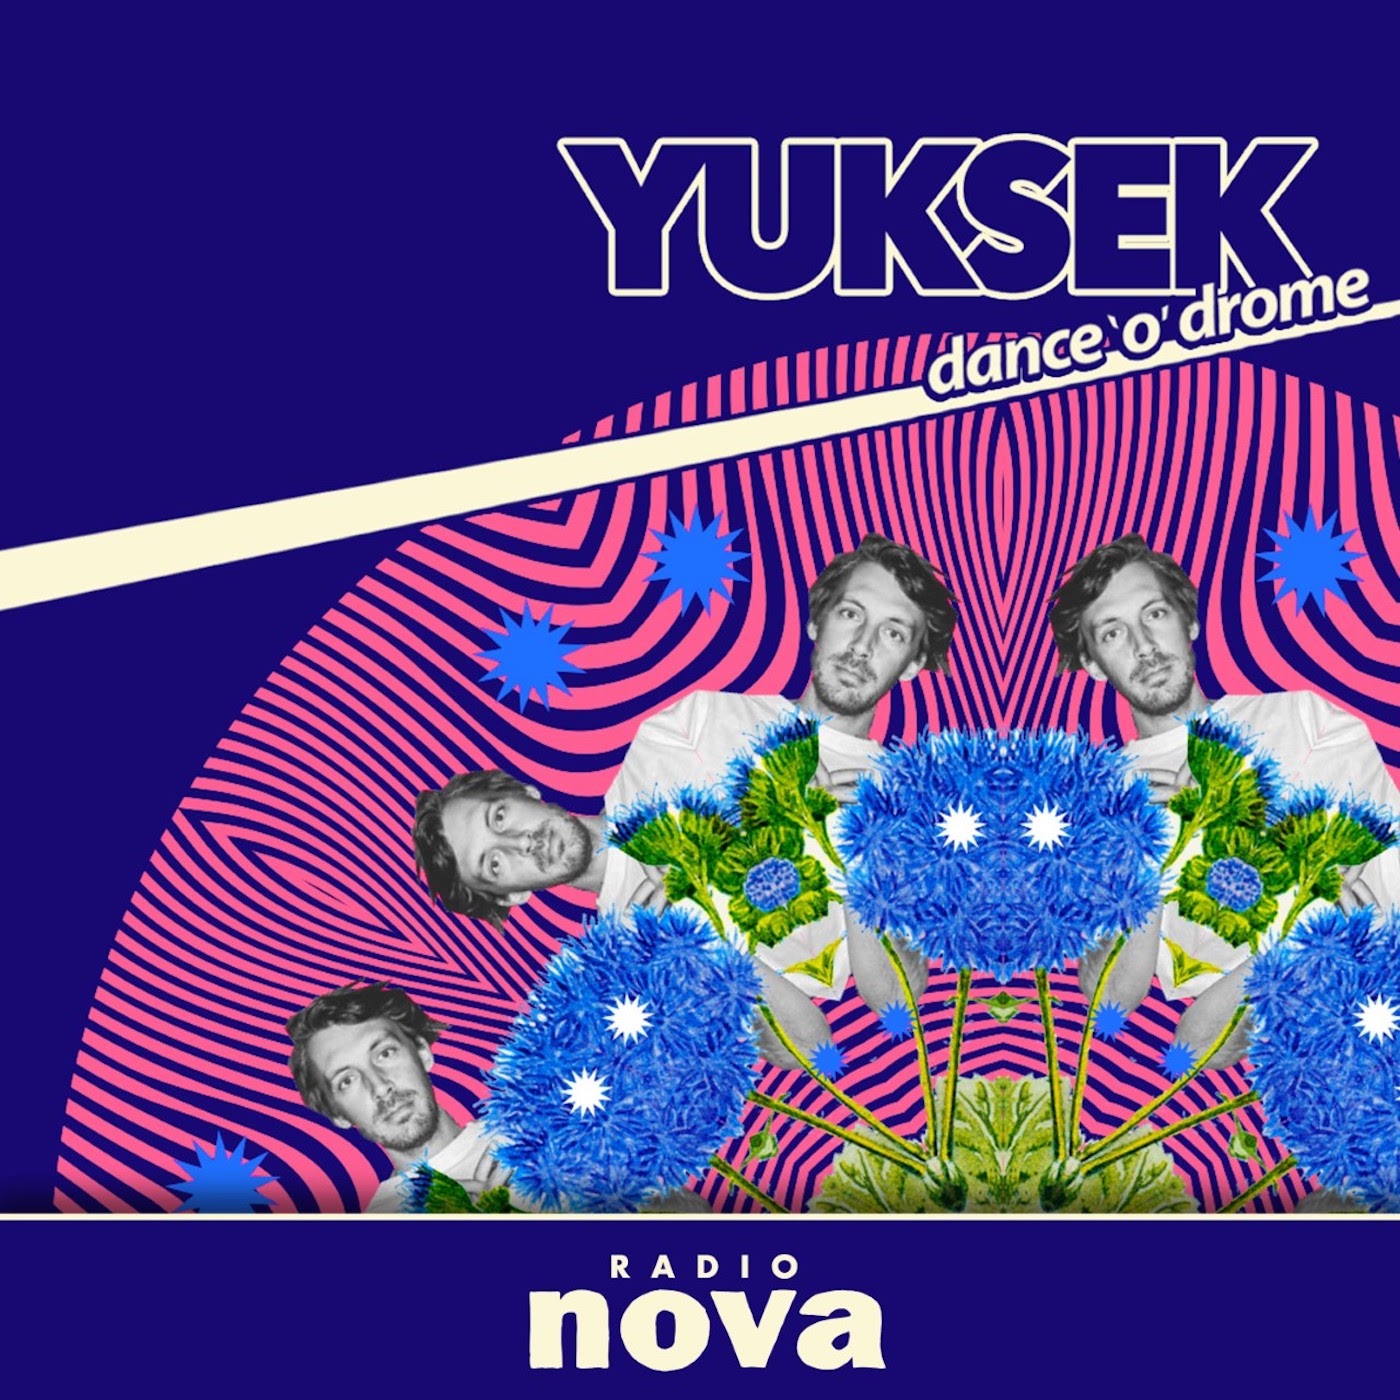 « Dance’o’drome »  #5 : le mix de Yuksek, avec Inigo Vontier, sur Radio Nova